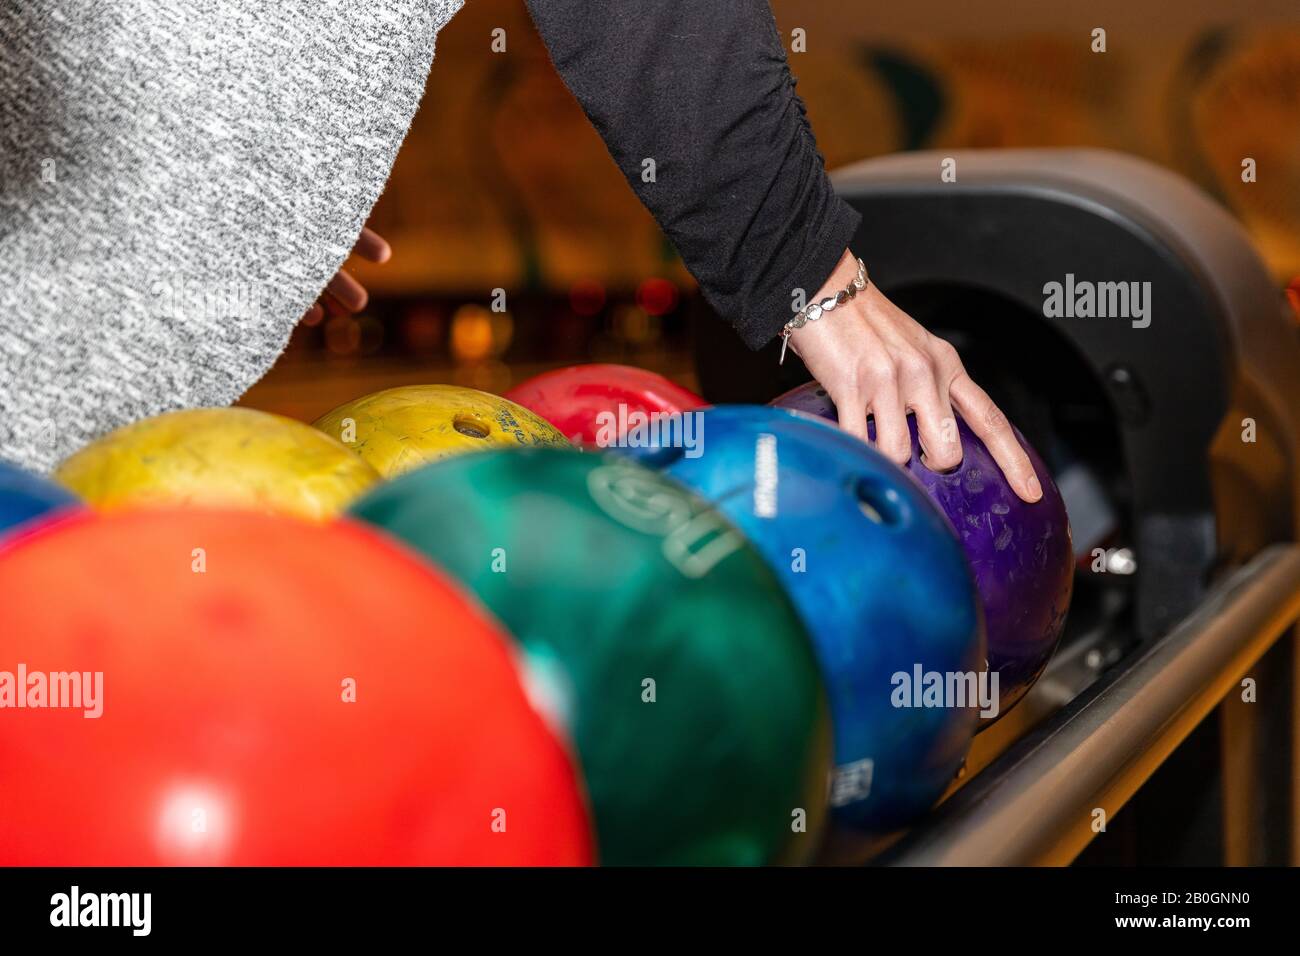 Hand picking up bowling ball at bowling alley. Stock Photo